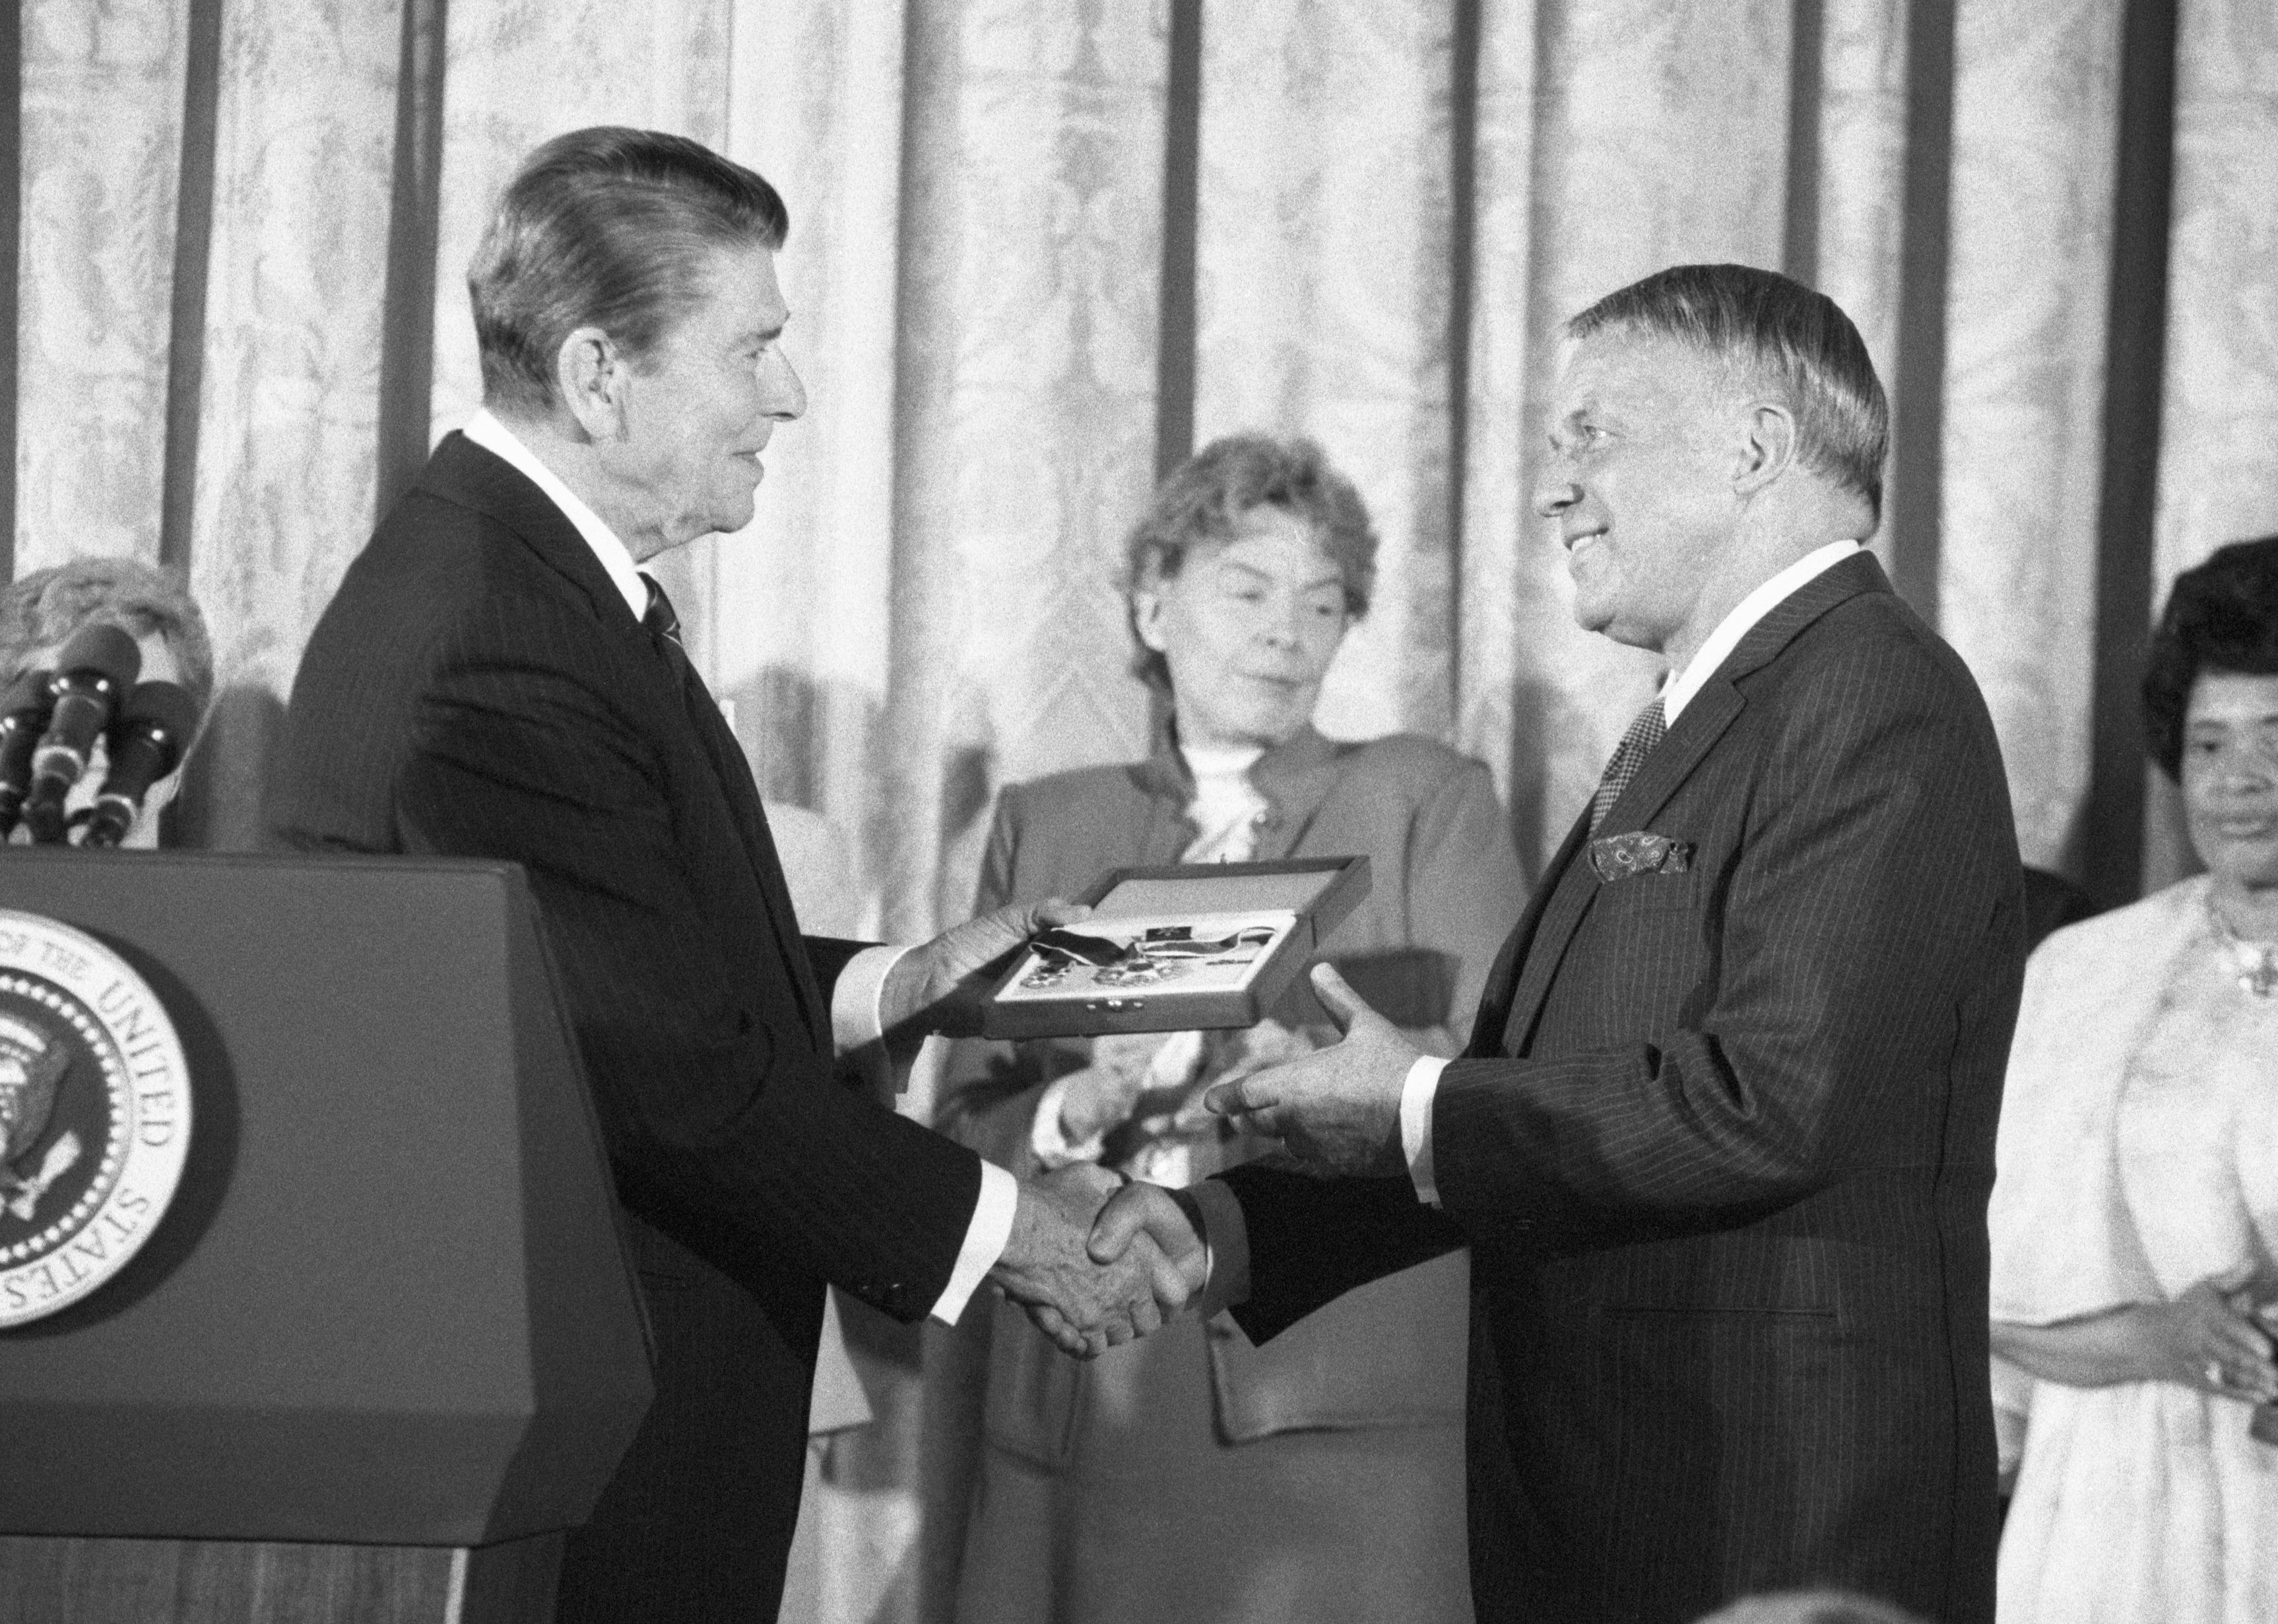 President Ronald Reagan awards the Medal of Freedom to singer Frank Sinatra.